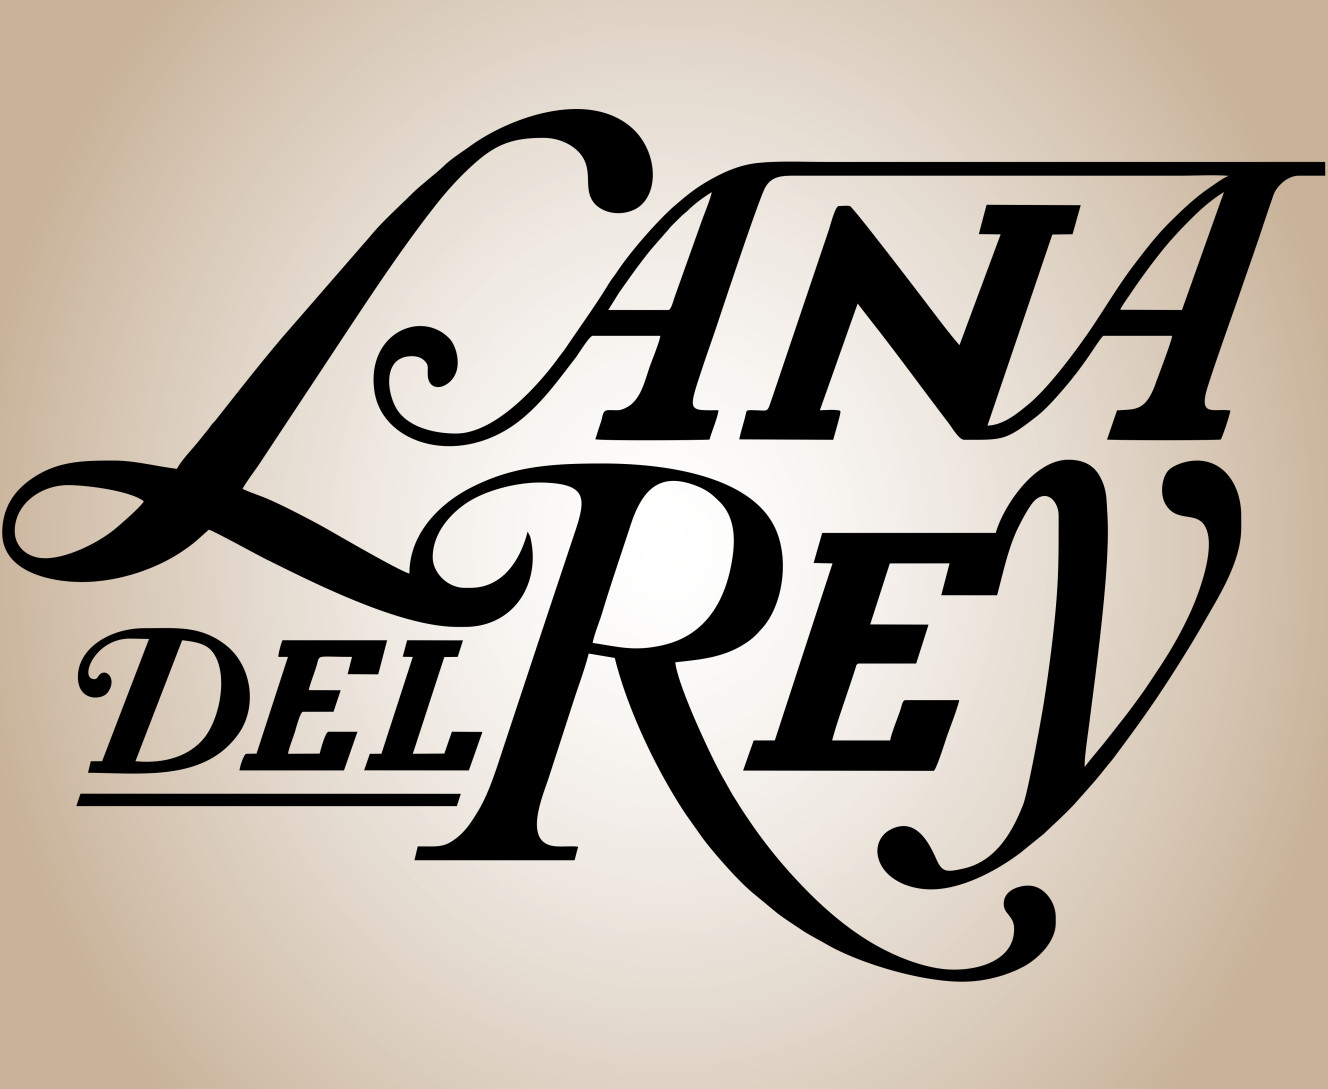 Lana Del Rey logo